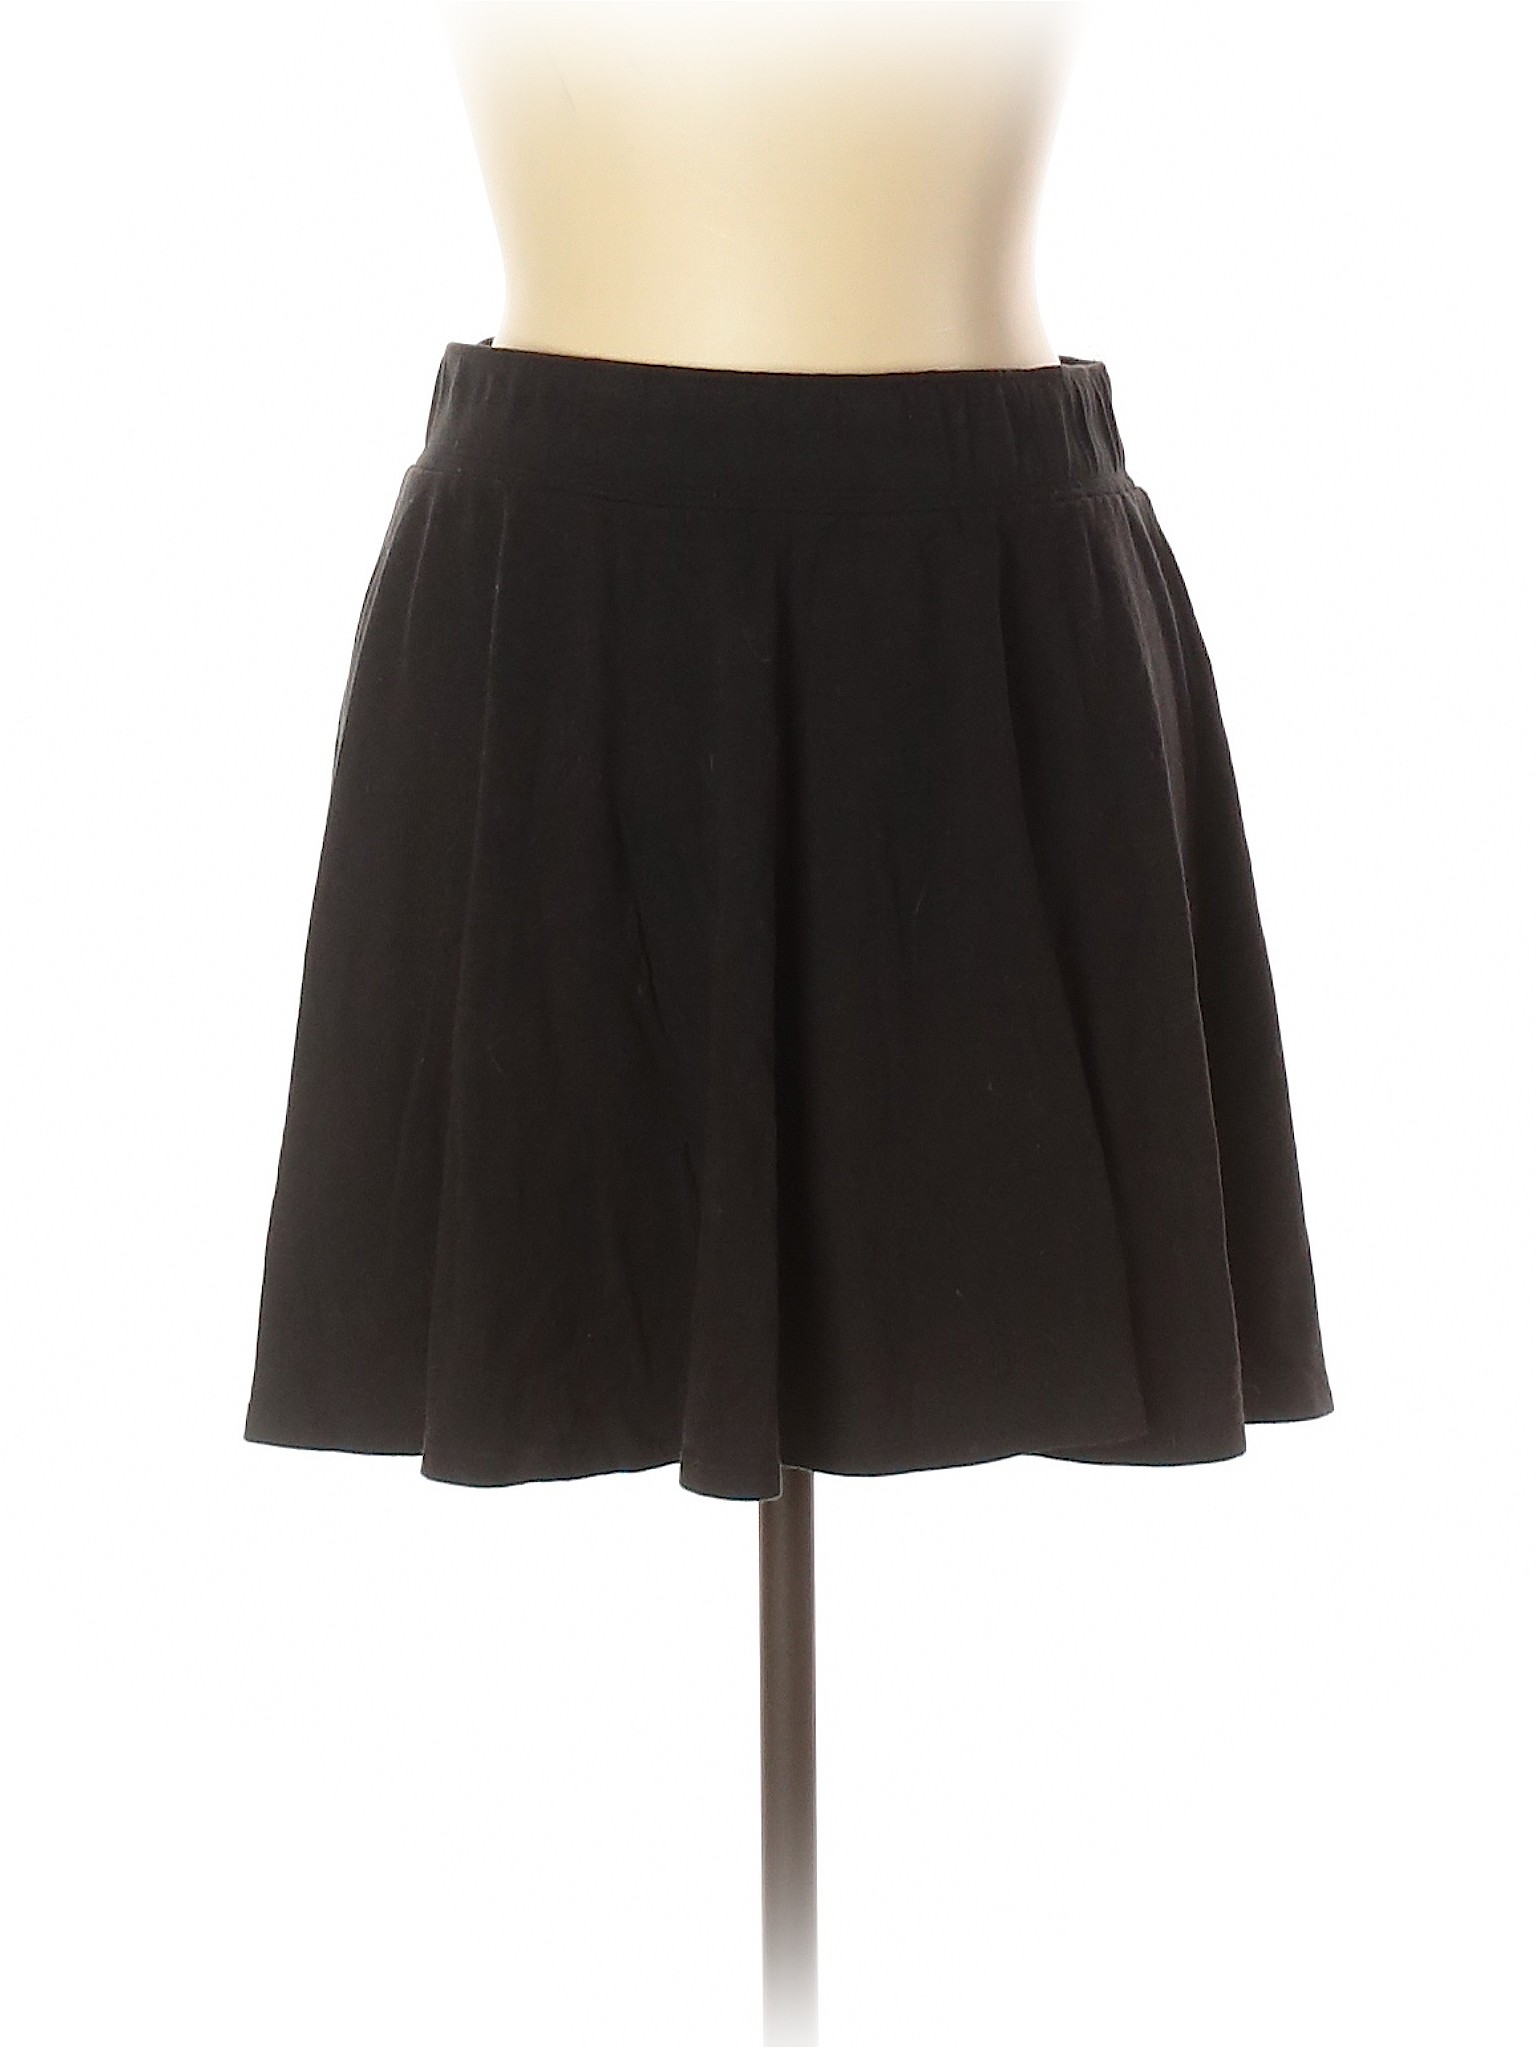 Hollister Solid Black Casual Skirt Size L - 77% off | thredUP